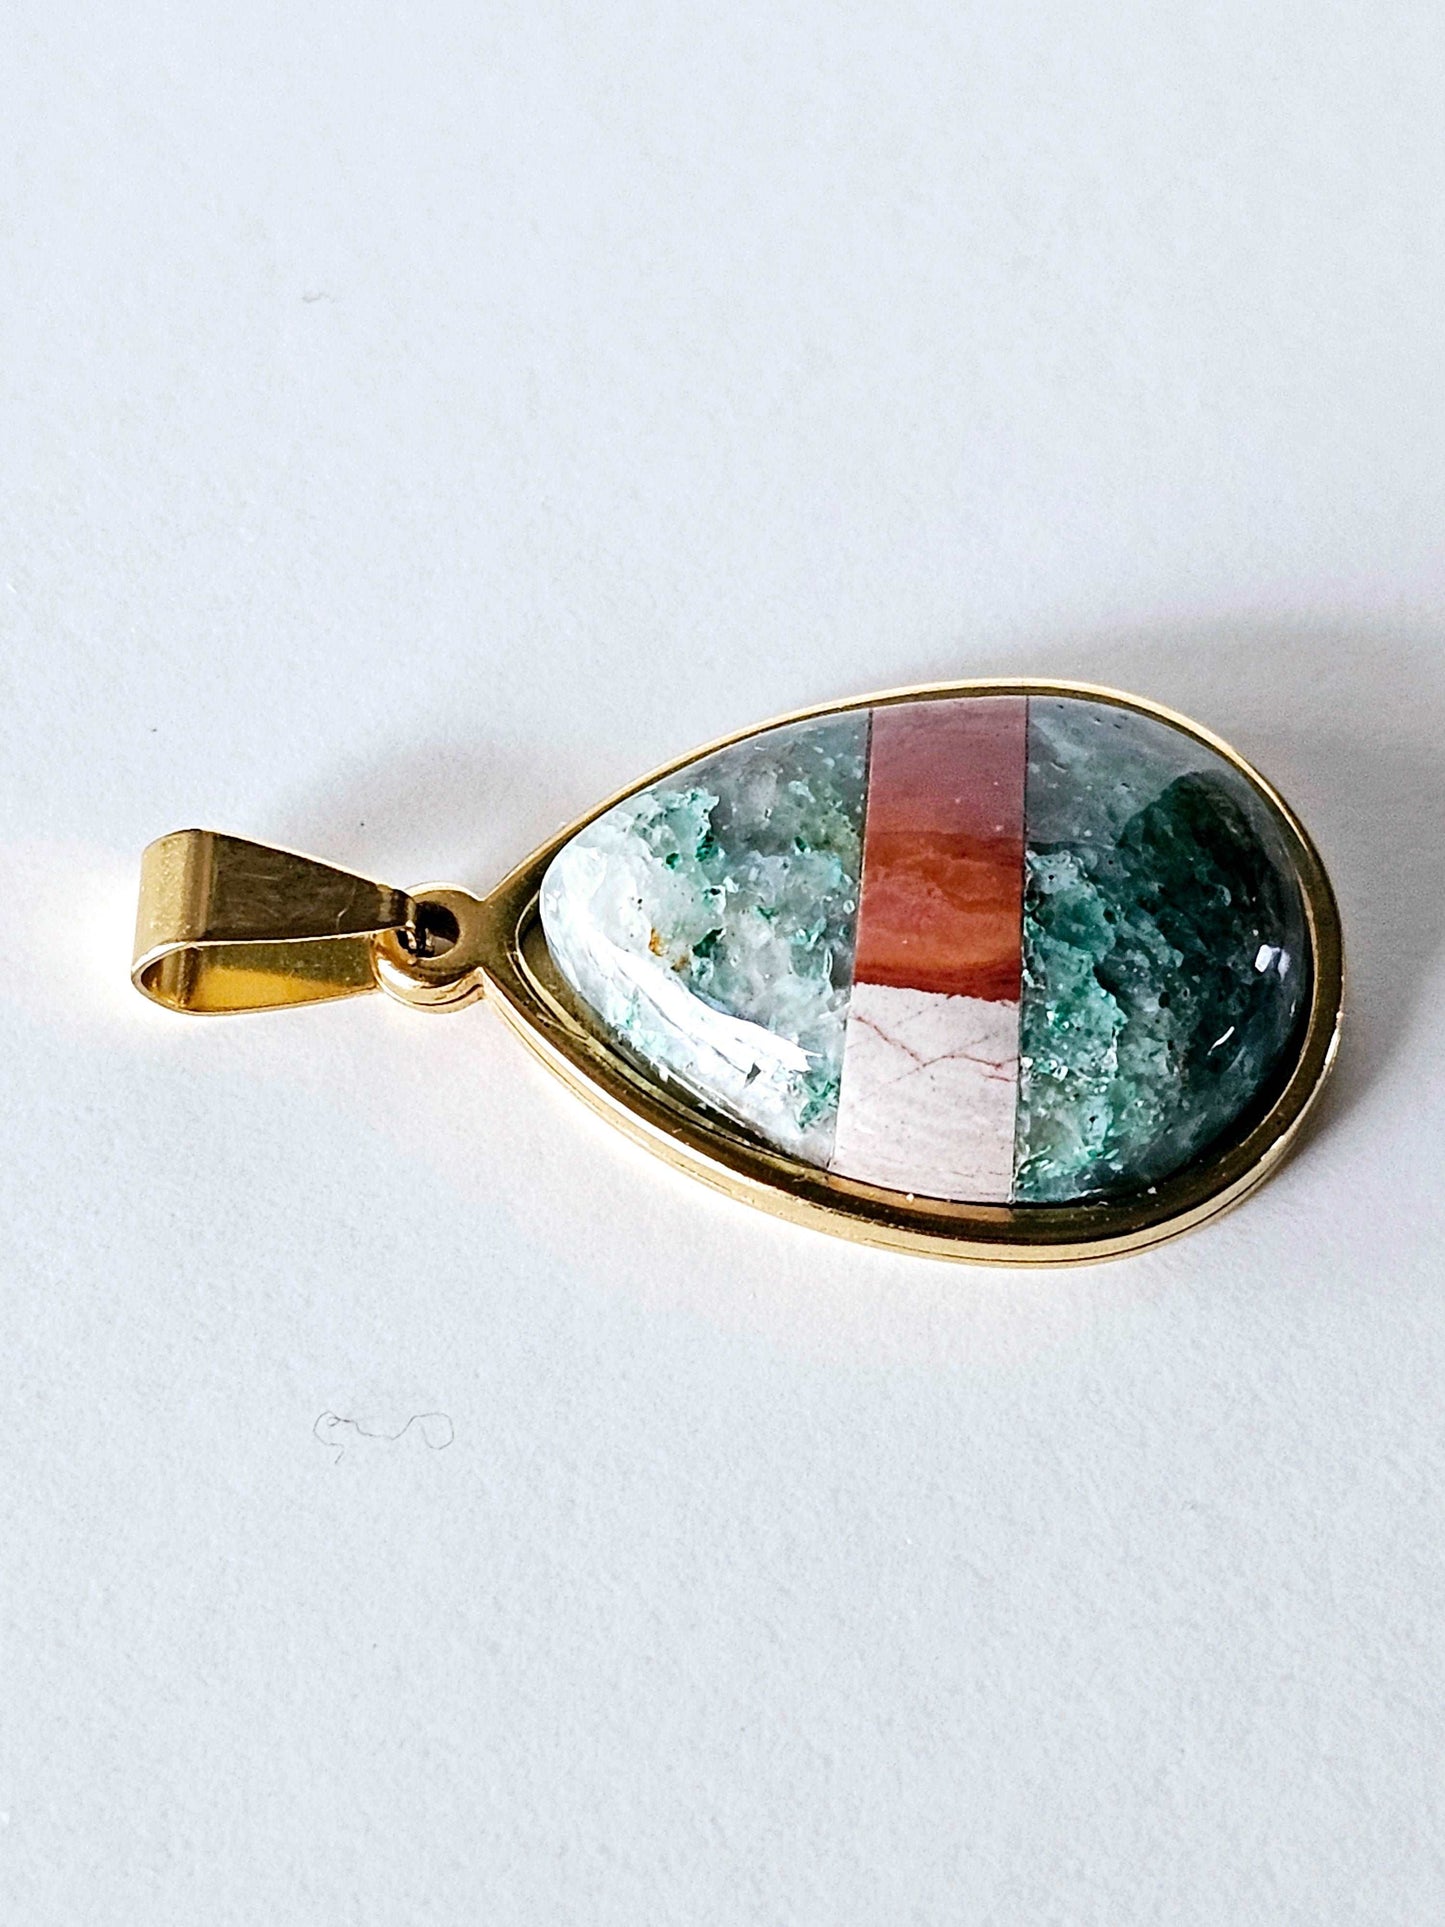 Elegant Gold Plated Teardrop Pendant with Chrysocolla and Jasper- Unique Statement Jewelry Scandinavian Gem Design